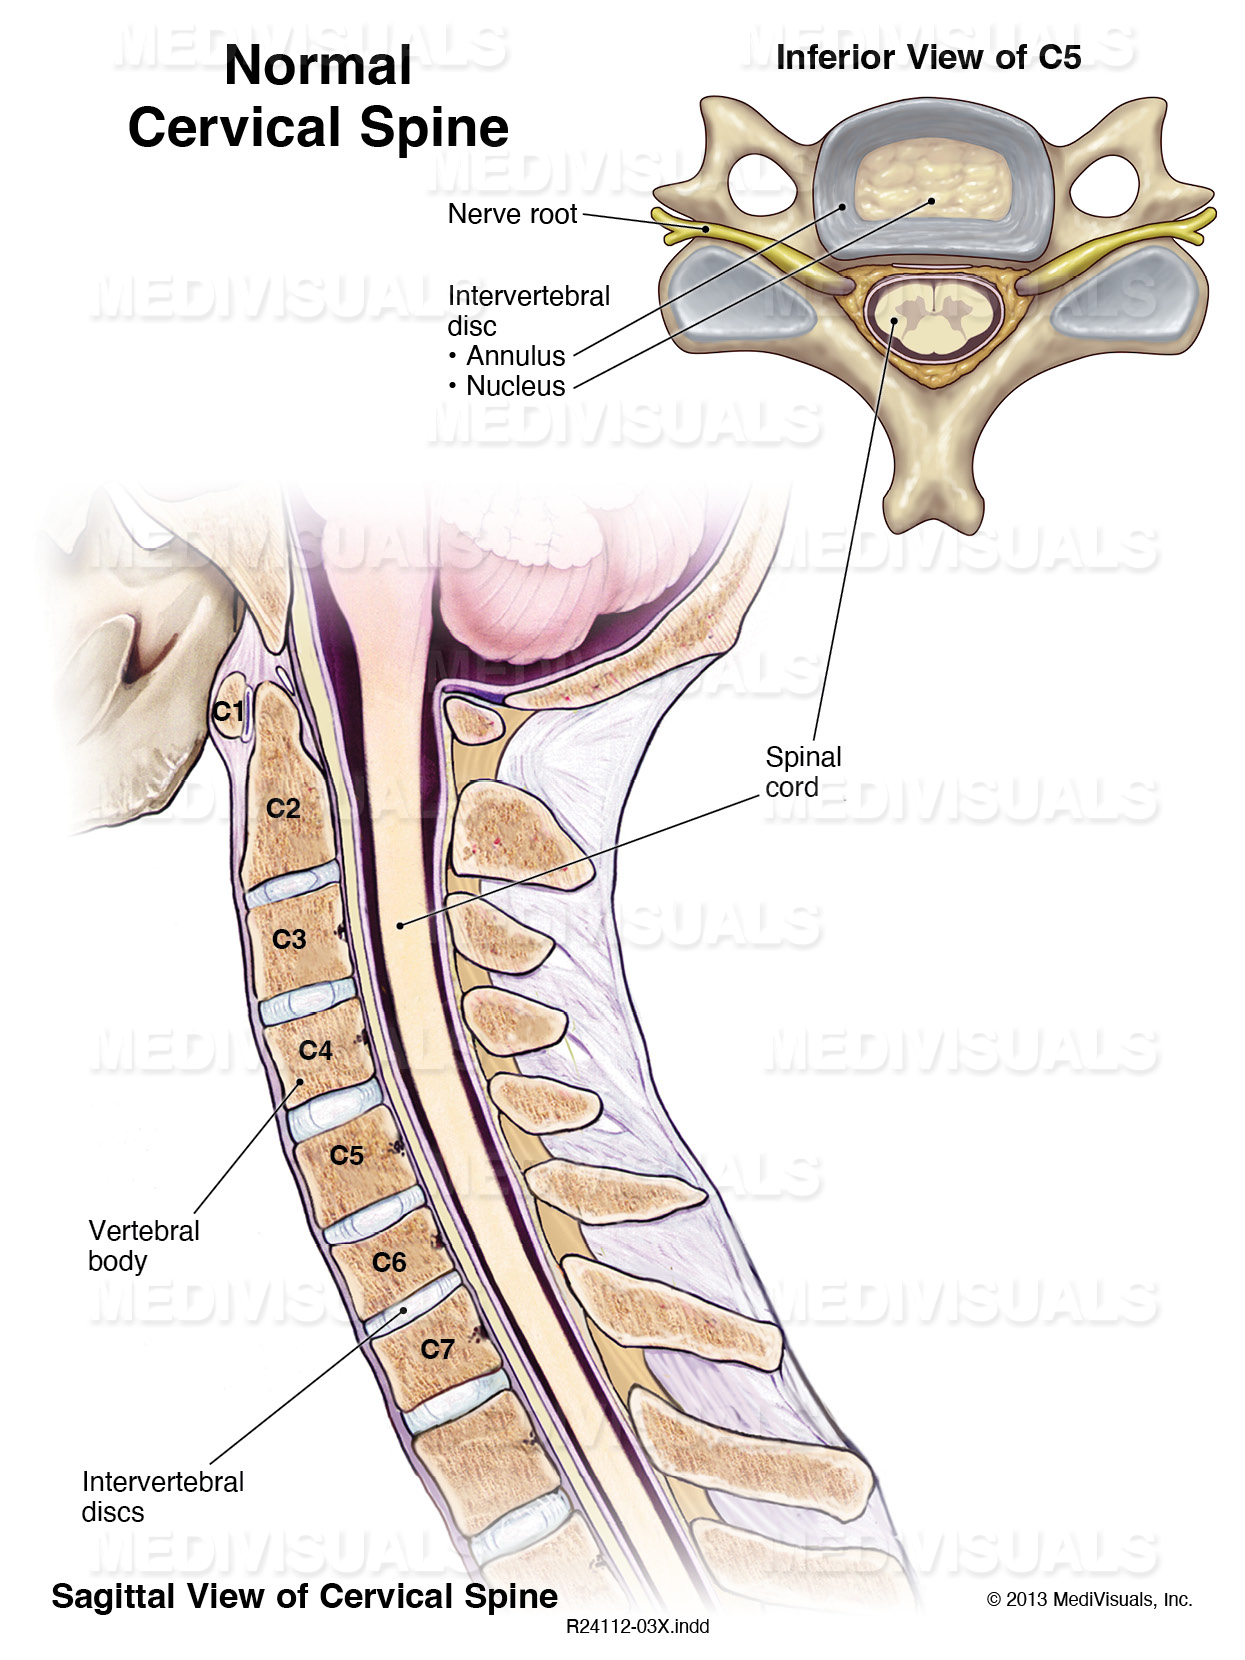 medivisuals diagram of a normal cervical spine